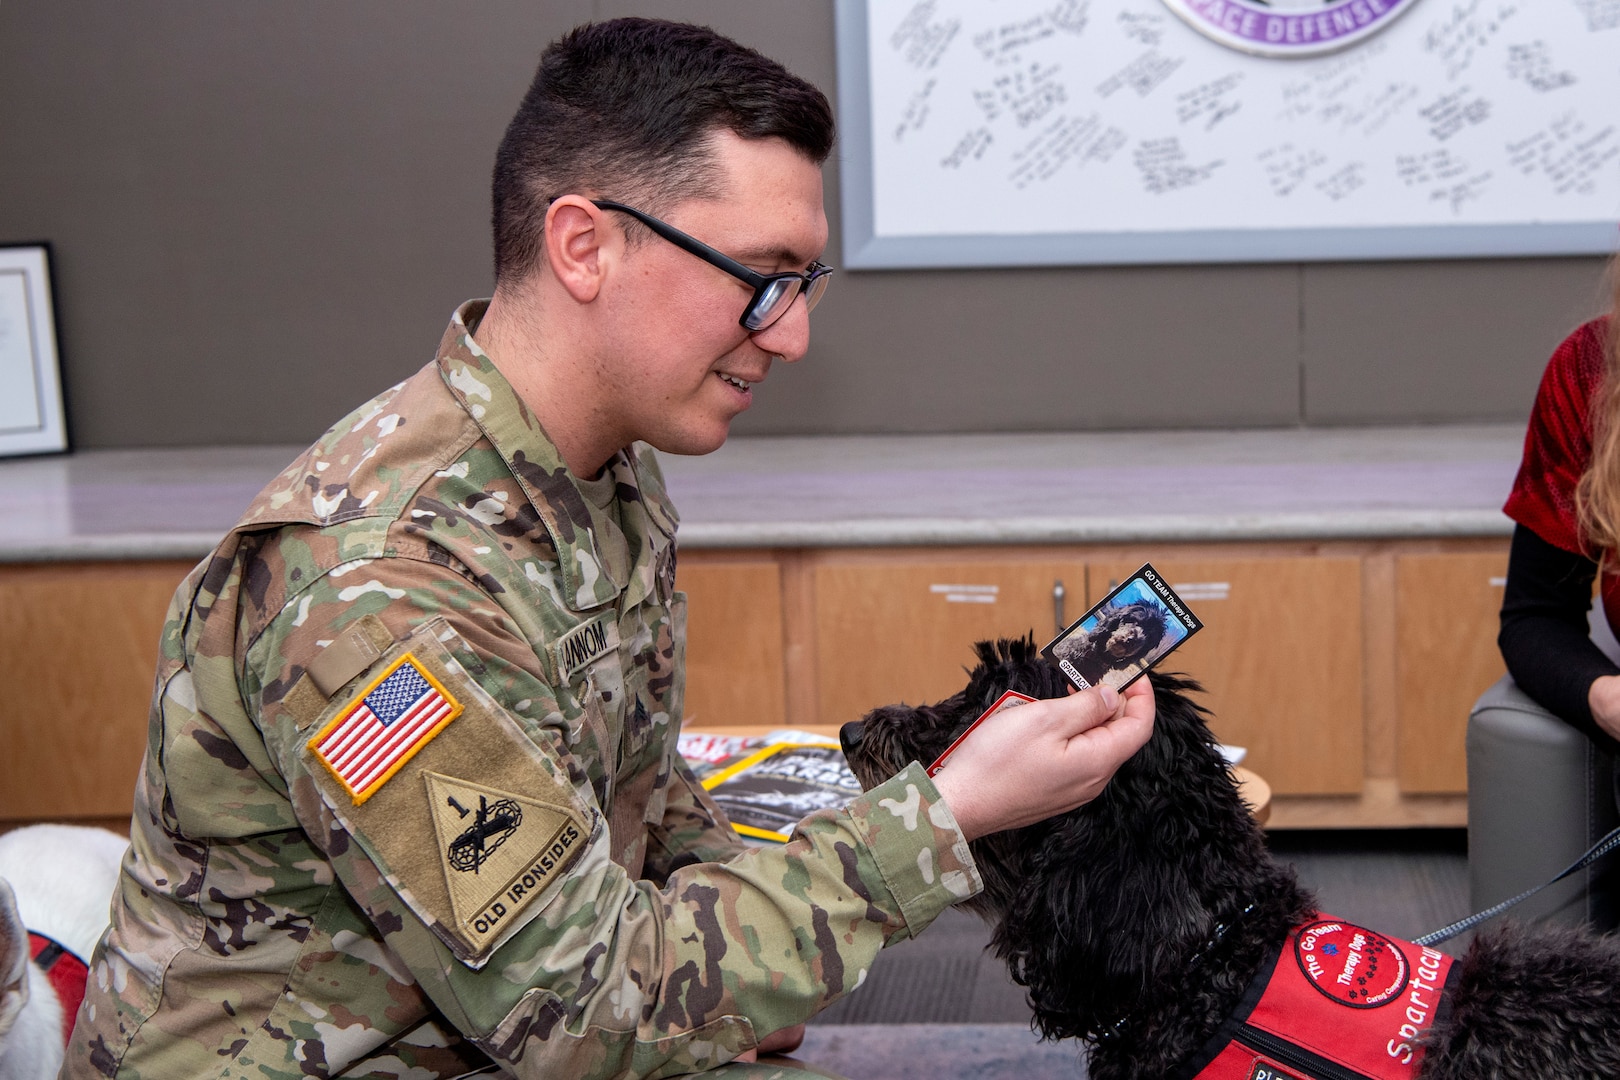 Man in military uniform pets dog